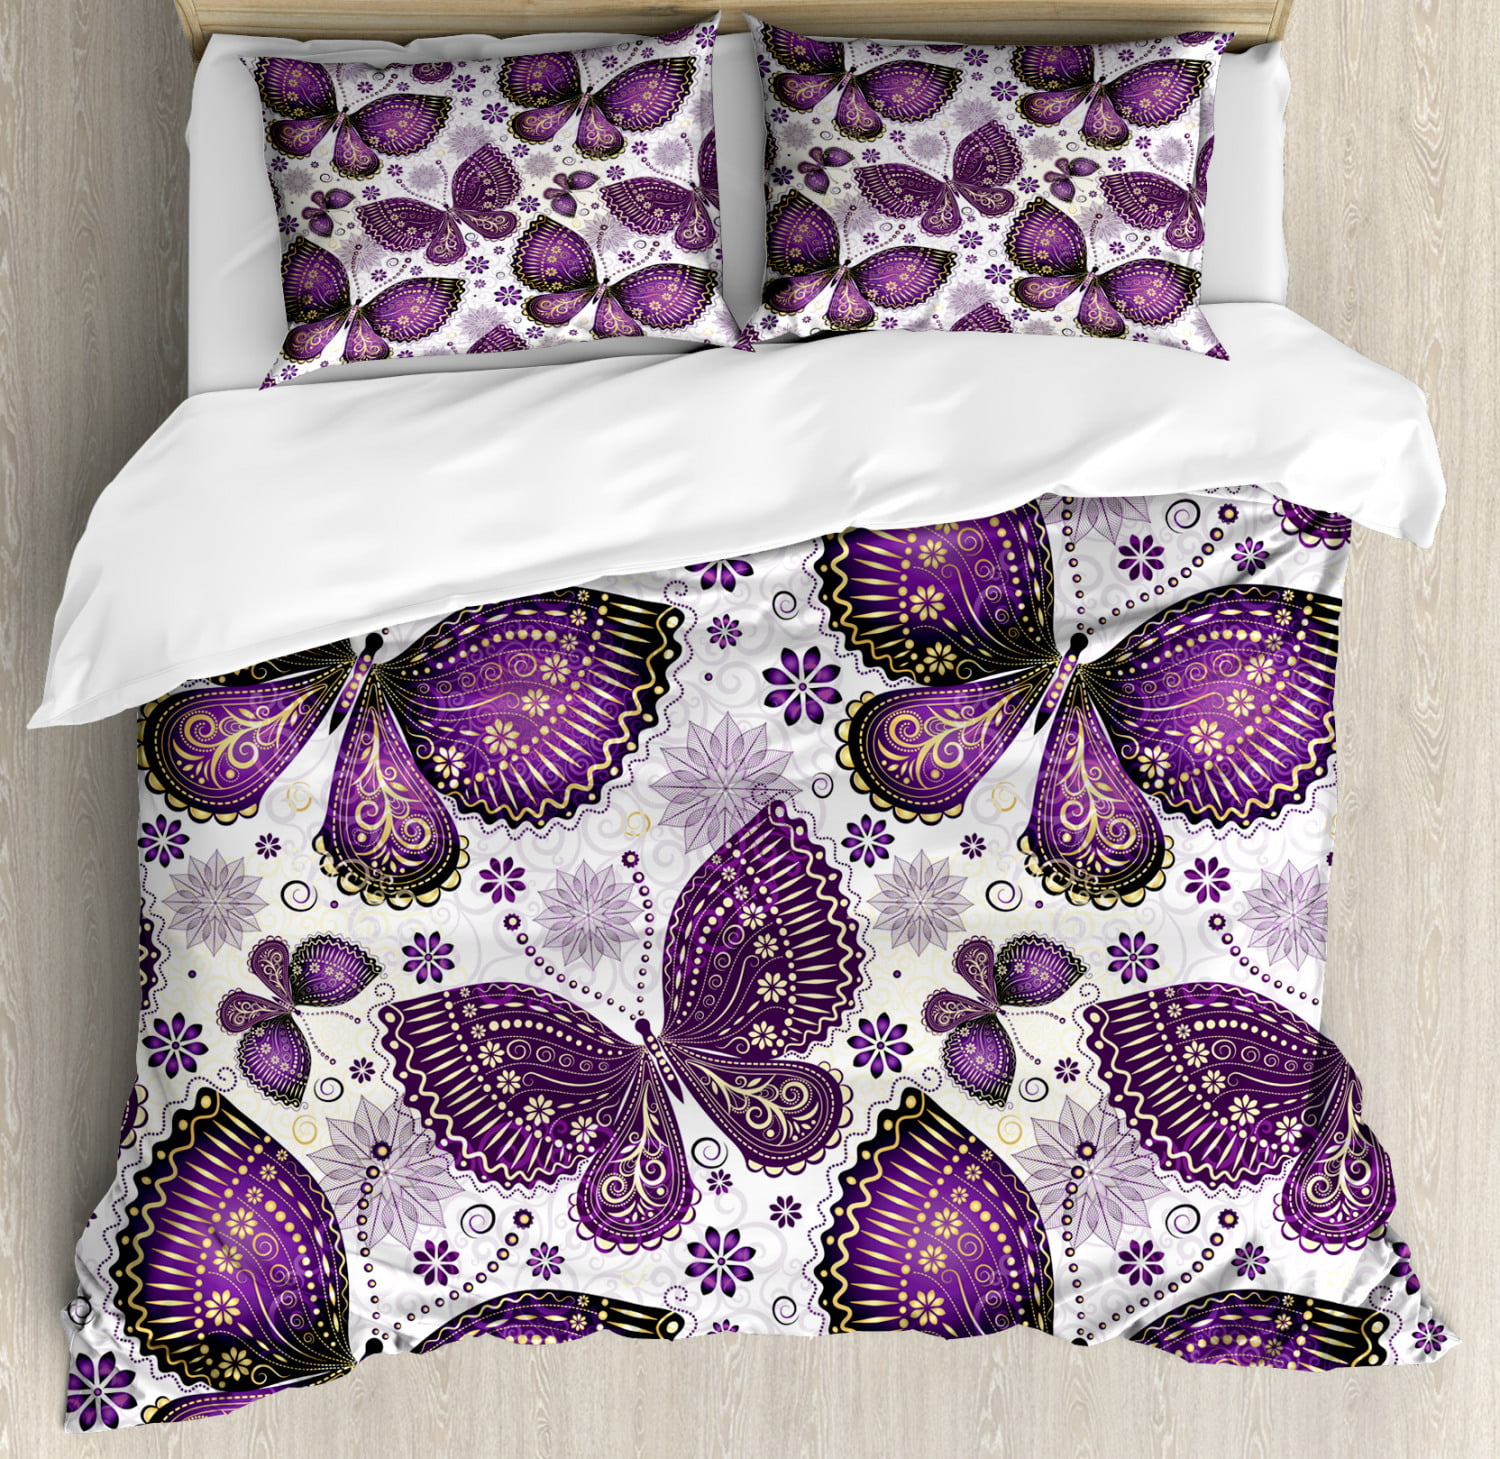 Queen/King/Cal K Paisley Luxury Cotton Bedding Set:1 Duvet Cover 2 Pillowcases 